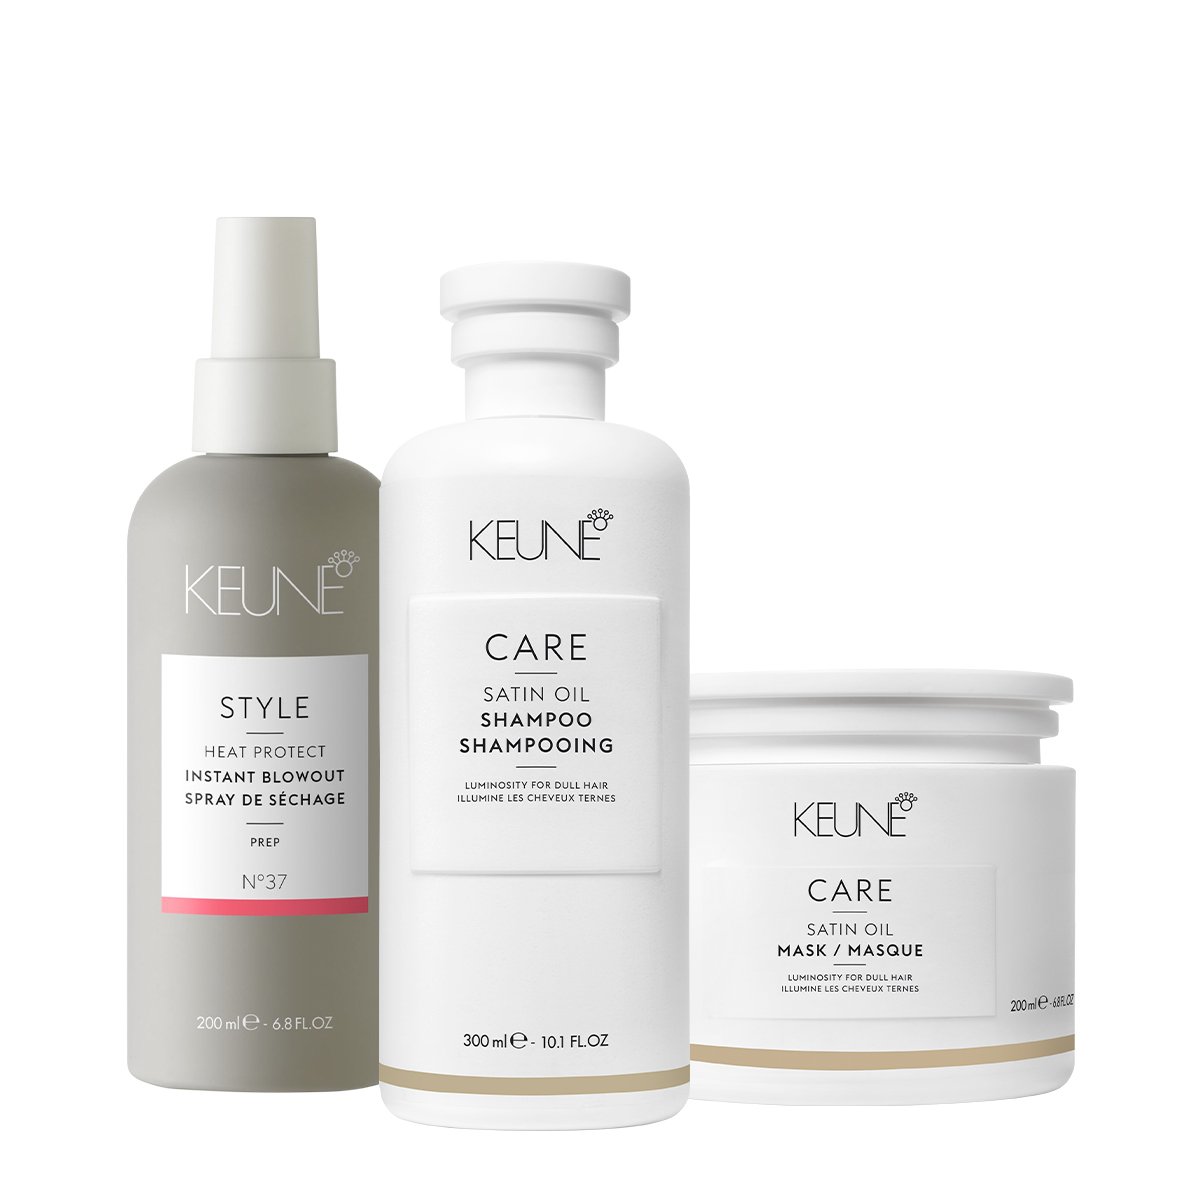 Kit Keune Care Satin Oil Shampoo Mascara e Style Instant Blowout 200ml N37 (3 produtos) ÚNICO 1